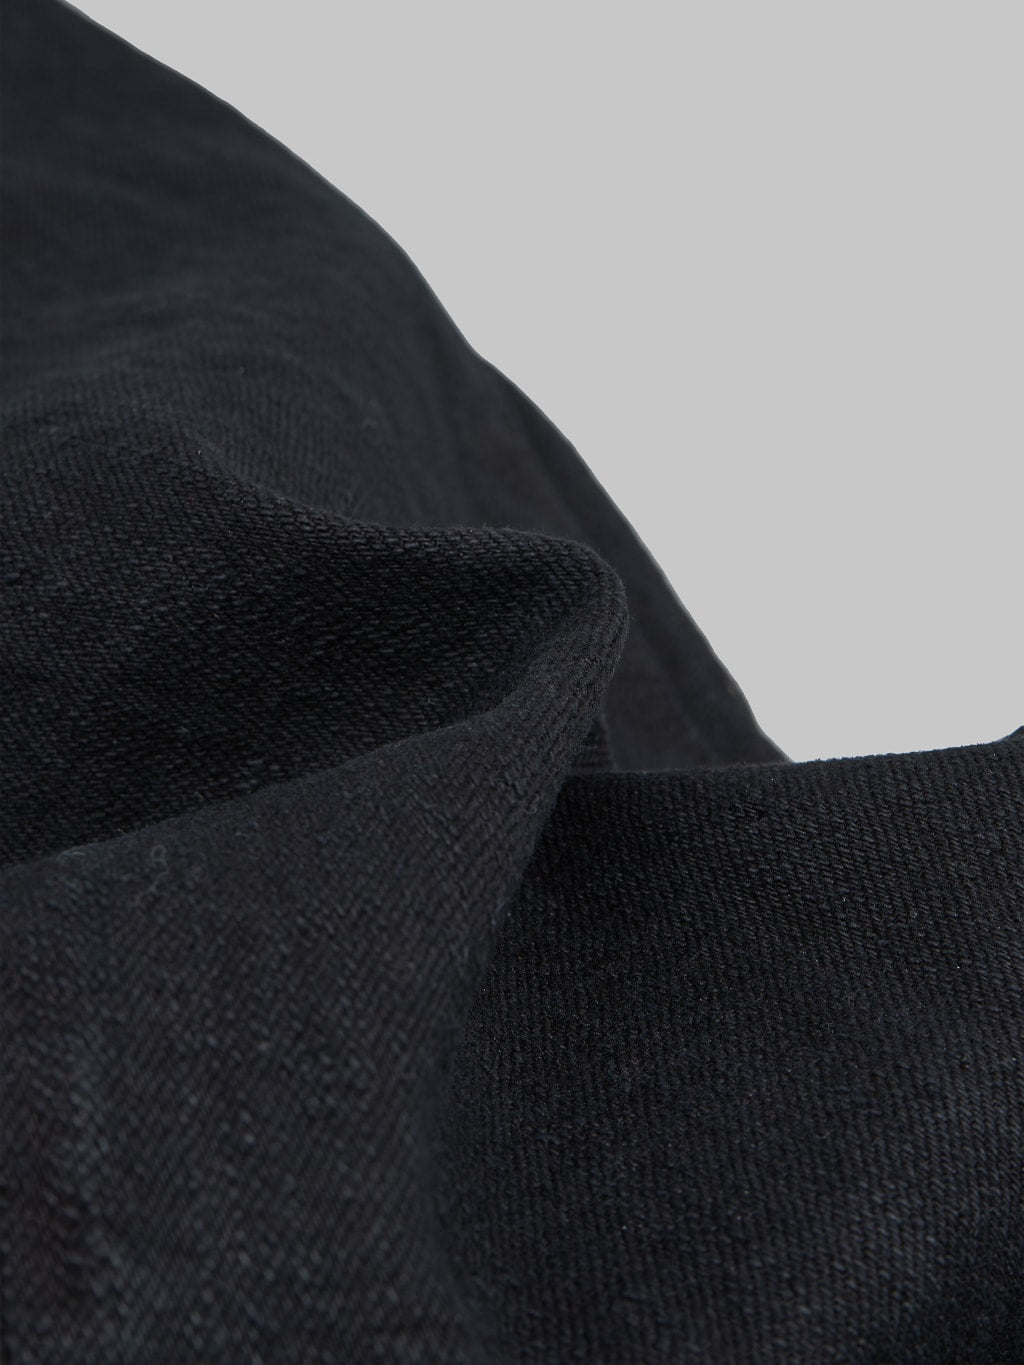 Studio DArtisan Kurozome Black 14oz Selvedge Jeans Relaxed Tapered texture